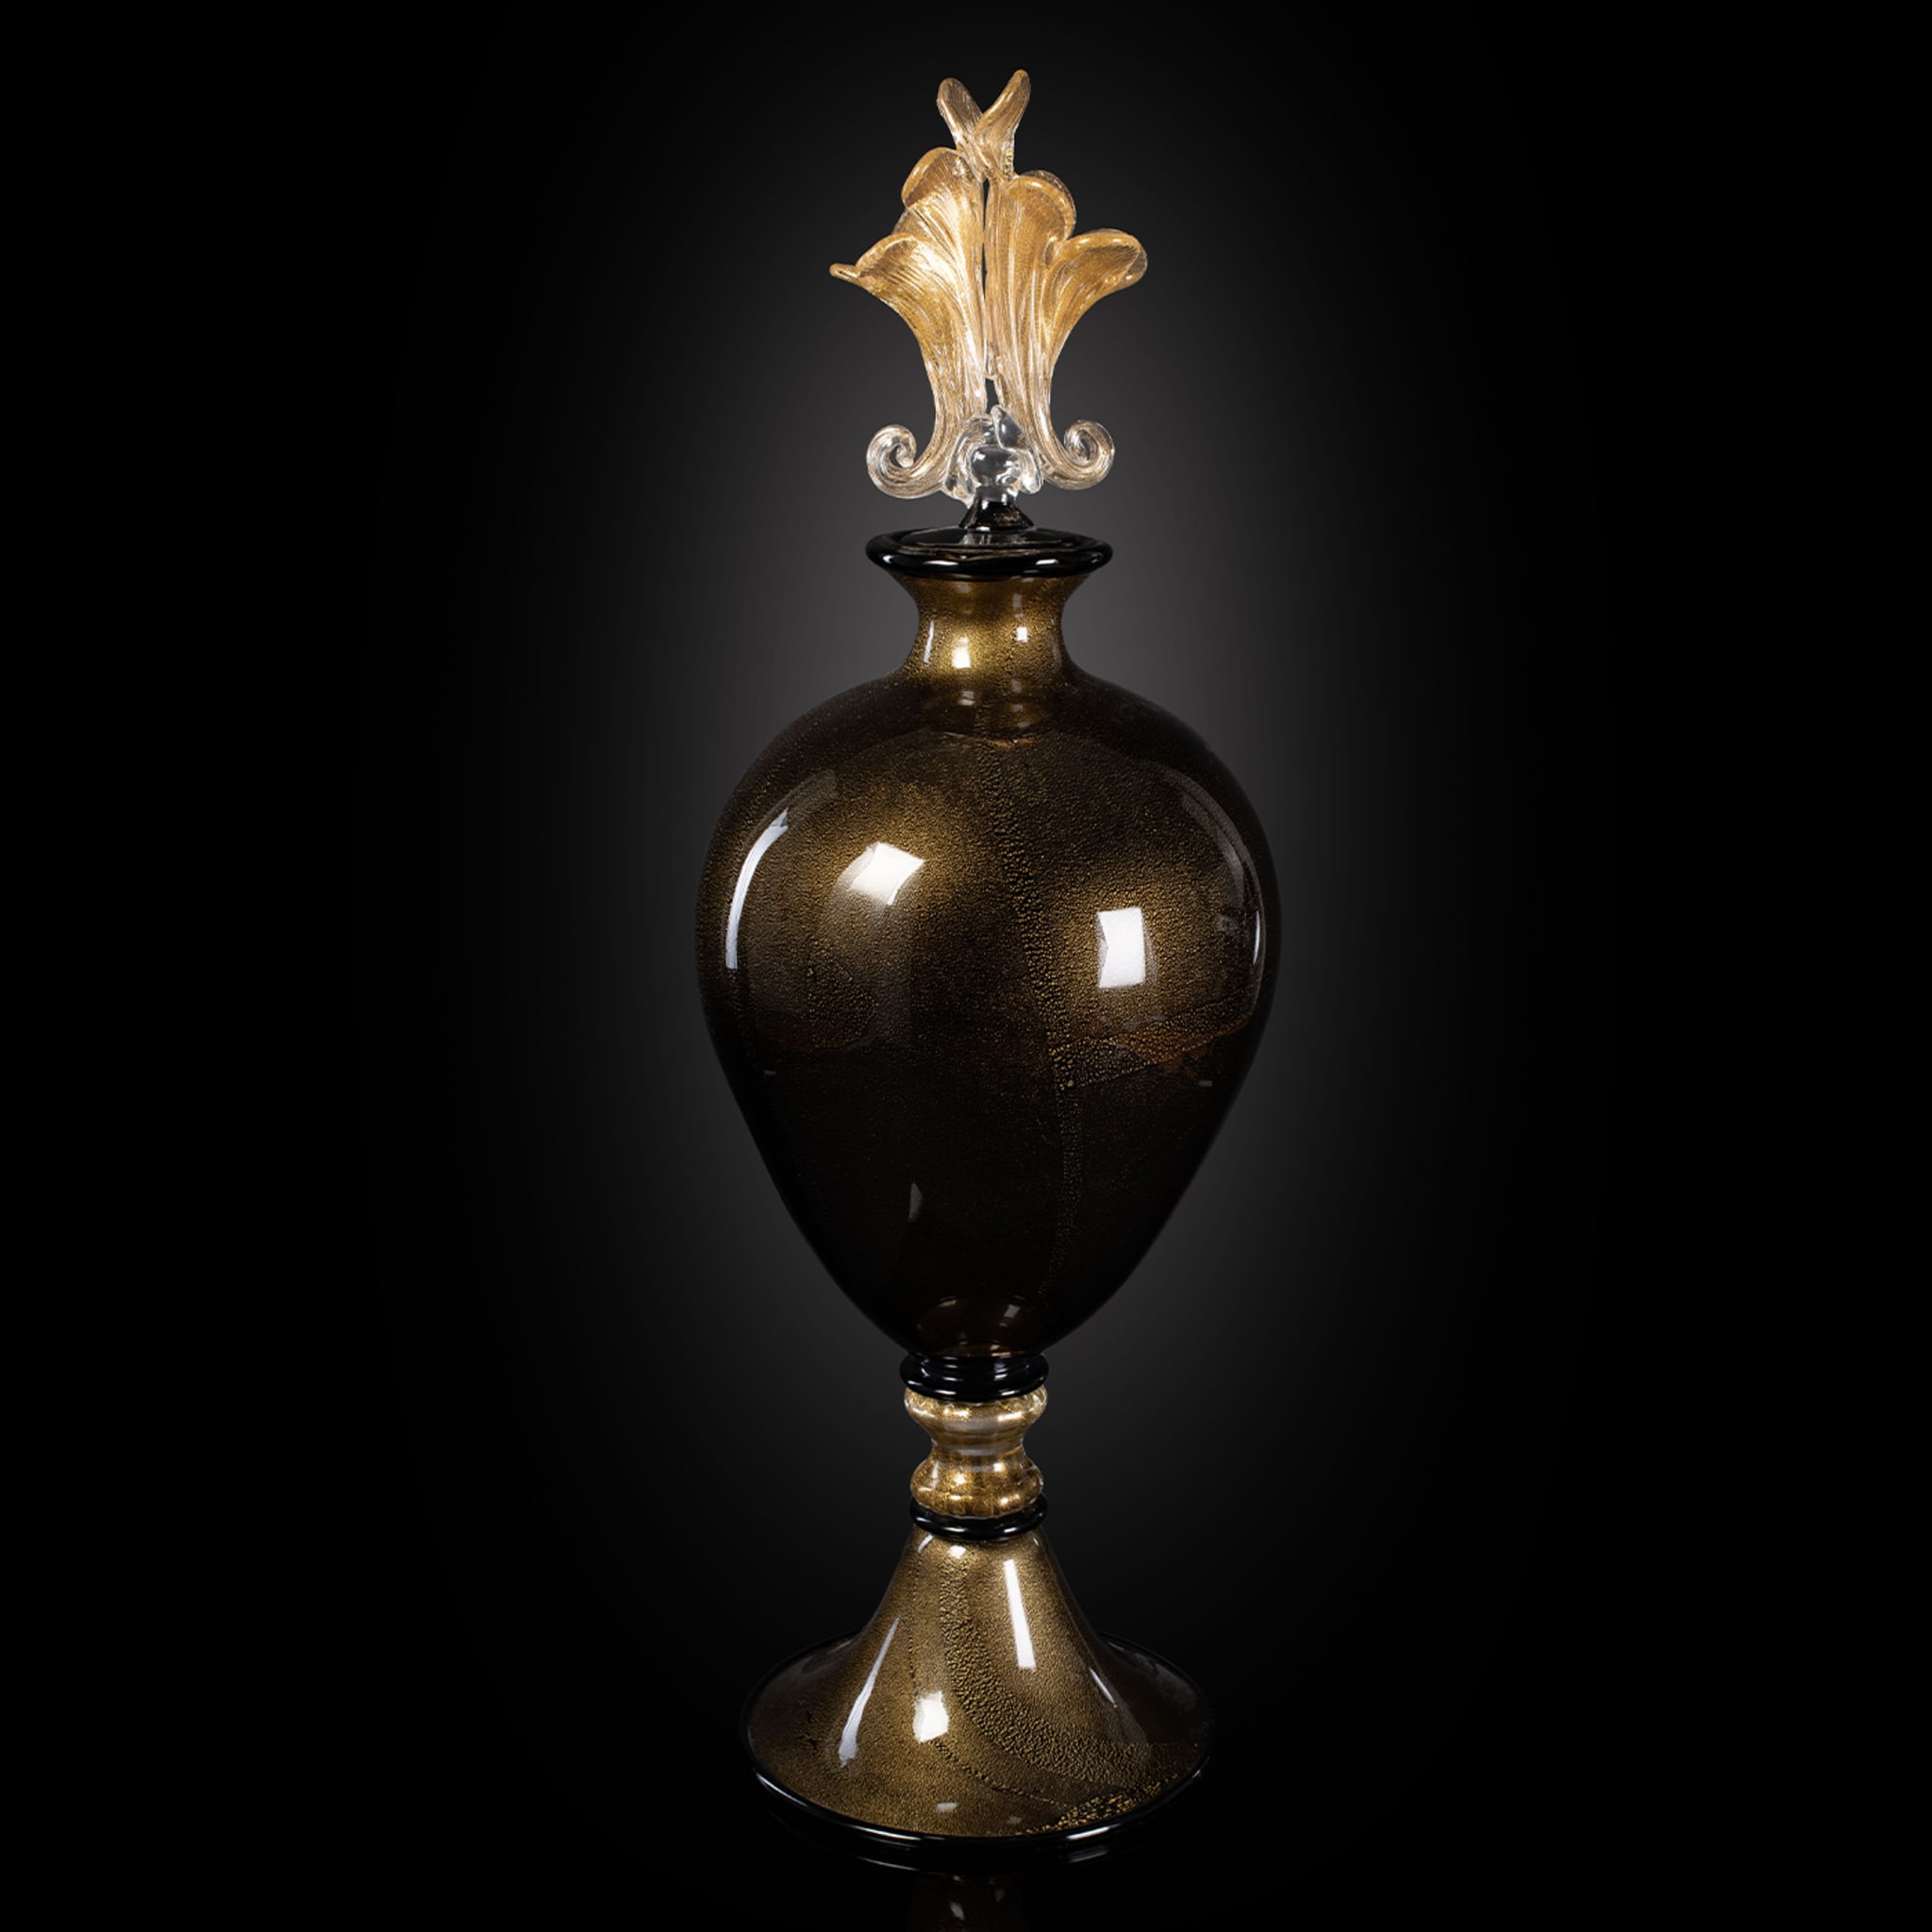 Stmat 24K Black & Gold Footed Vase with Lid - Alternative view 1